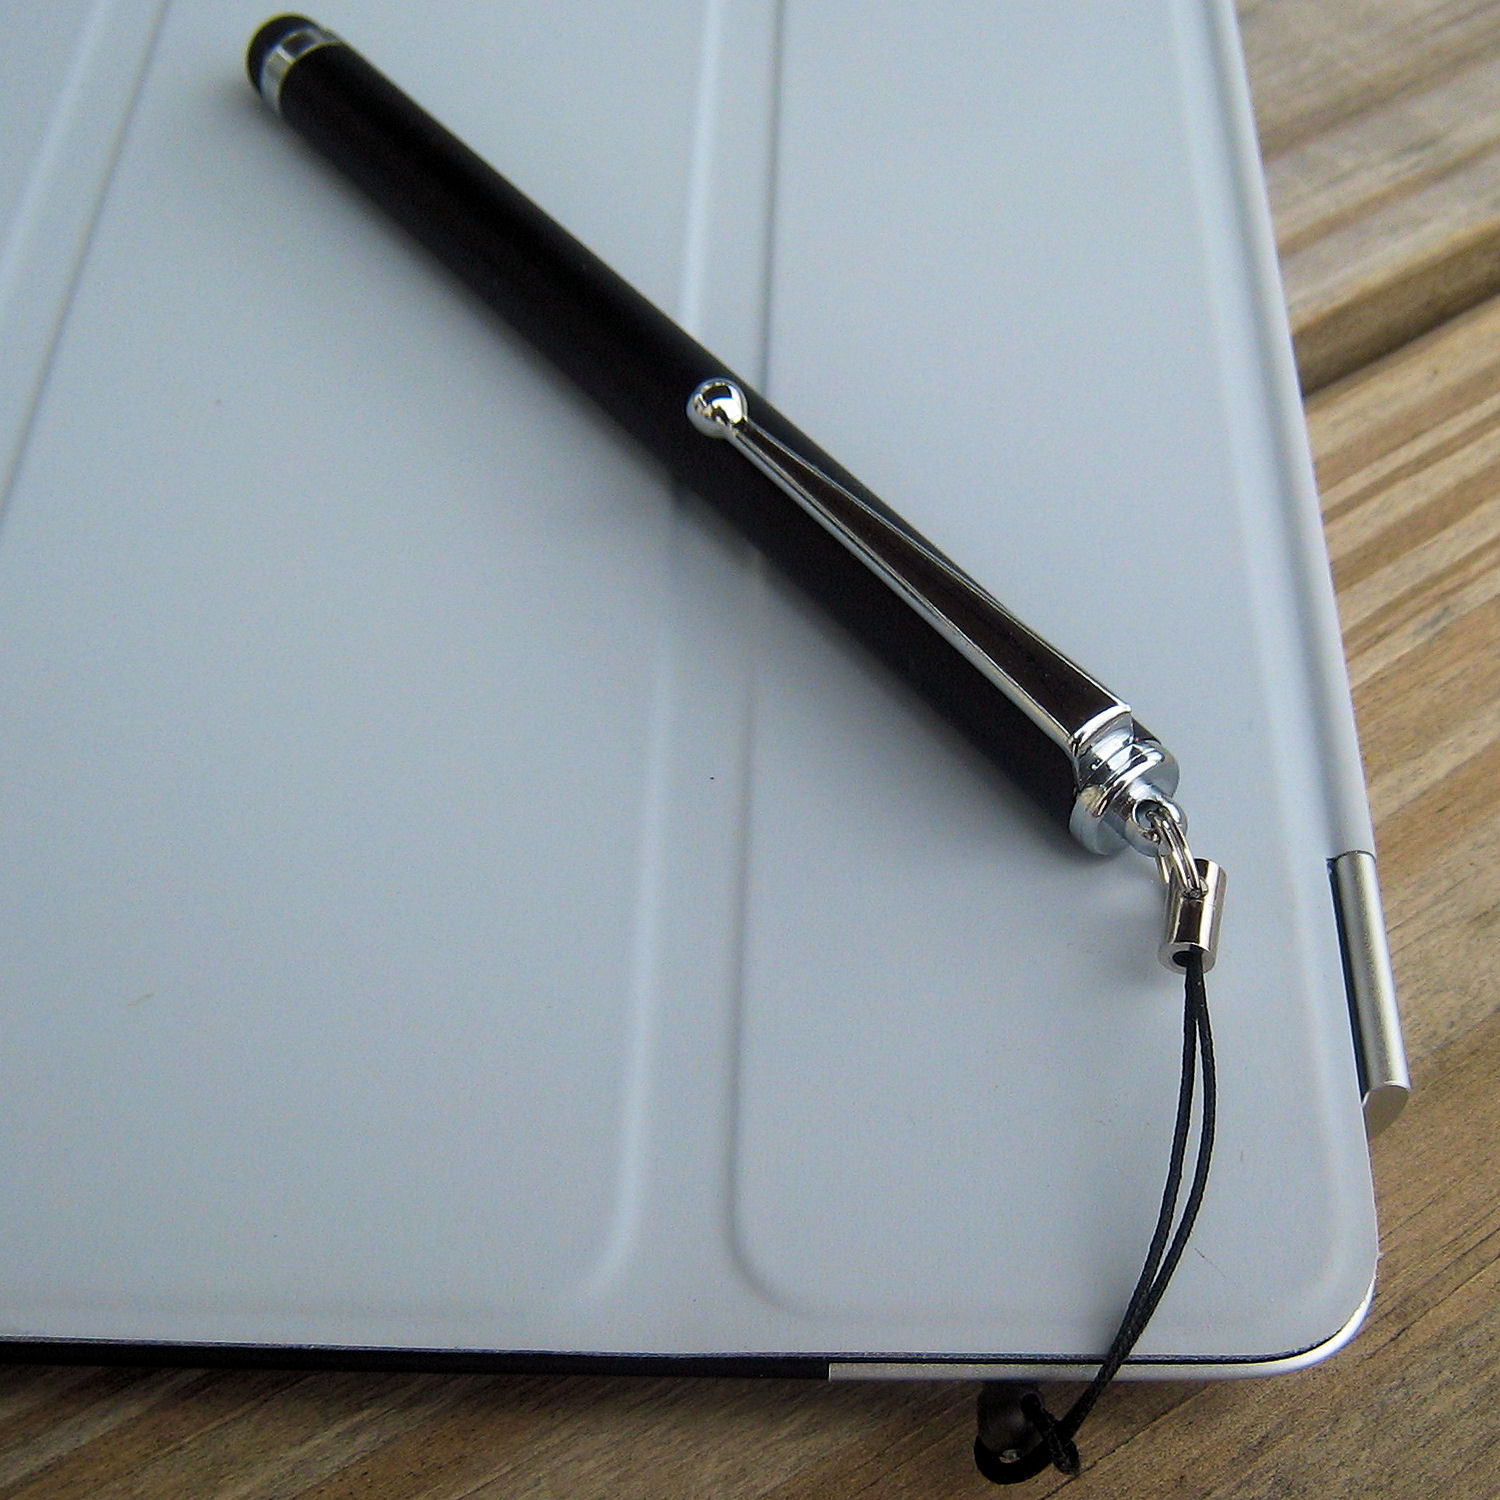 Gomadic Precision Tip Capacitive Stylus Pen designed for the Motorola Electrify M XT905 (Black Color) - Lifetime Warranty